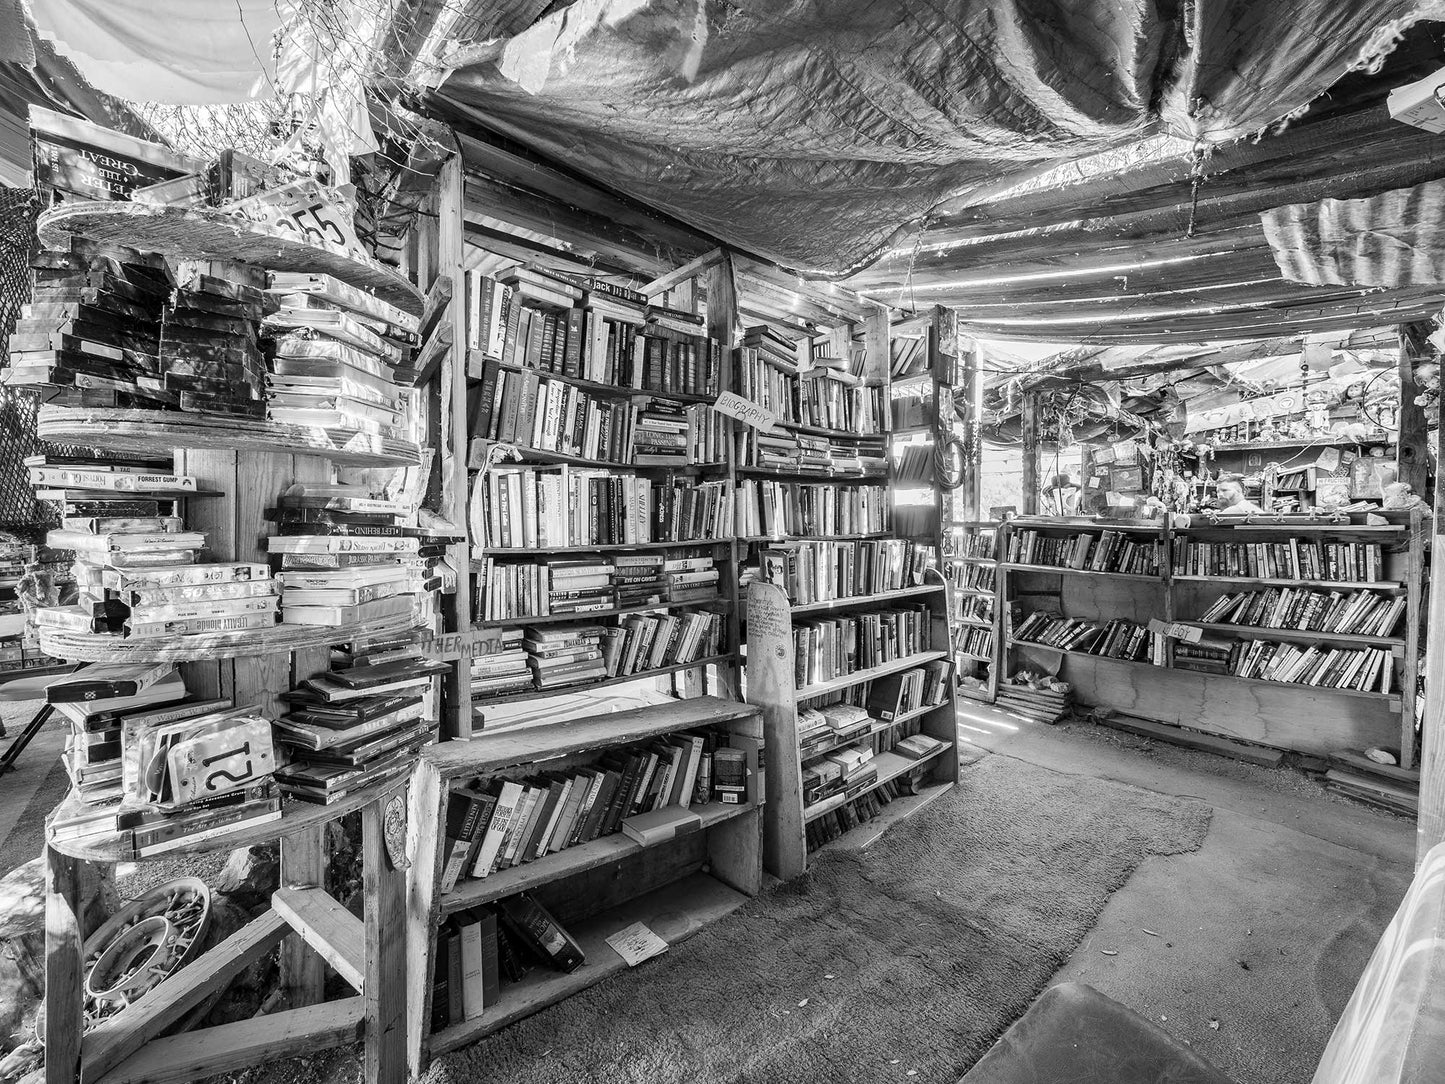 Slab City Library #2, Salton Sea 2019